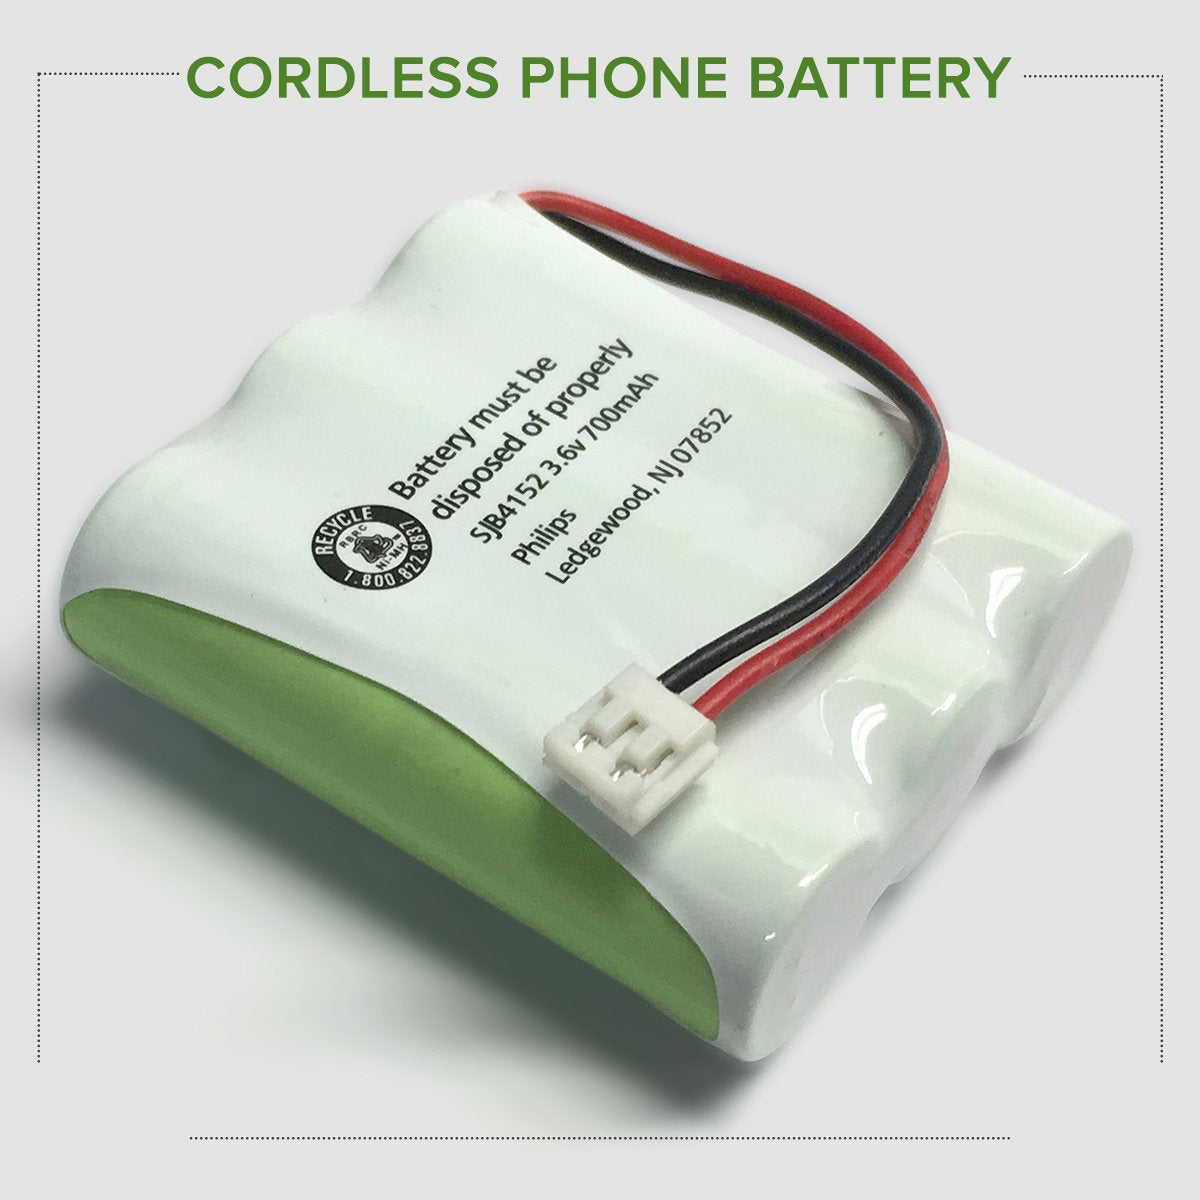 AT&T  90556 Cordless Phone Battery